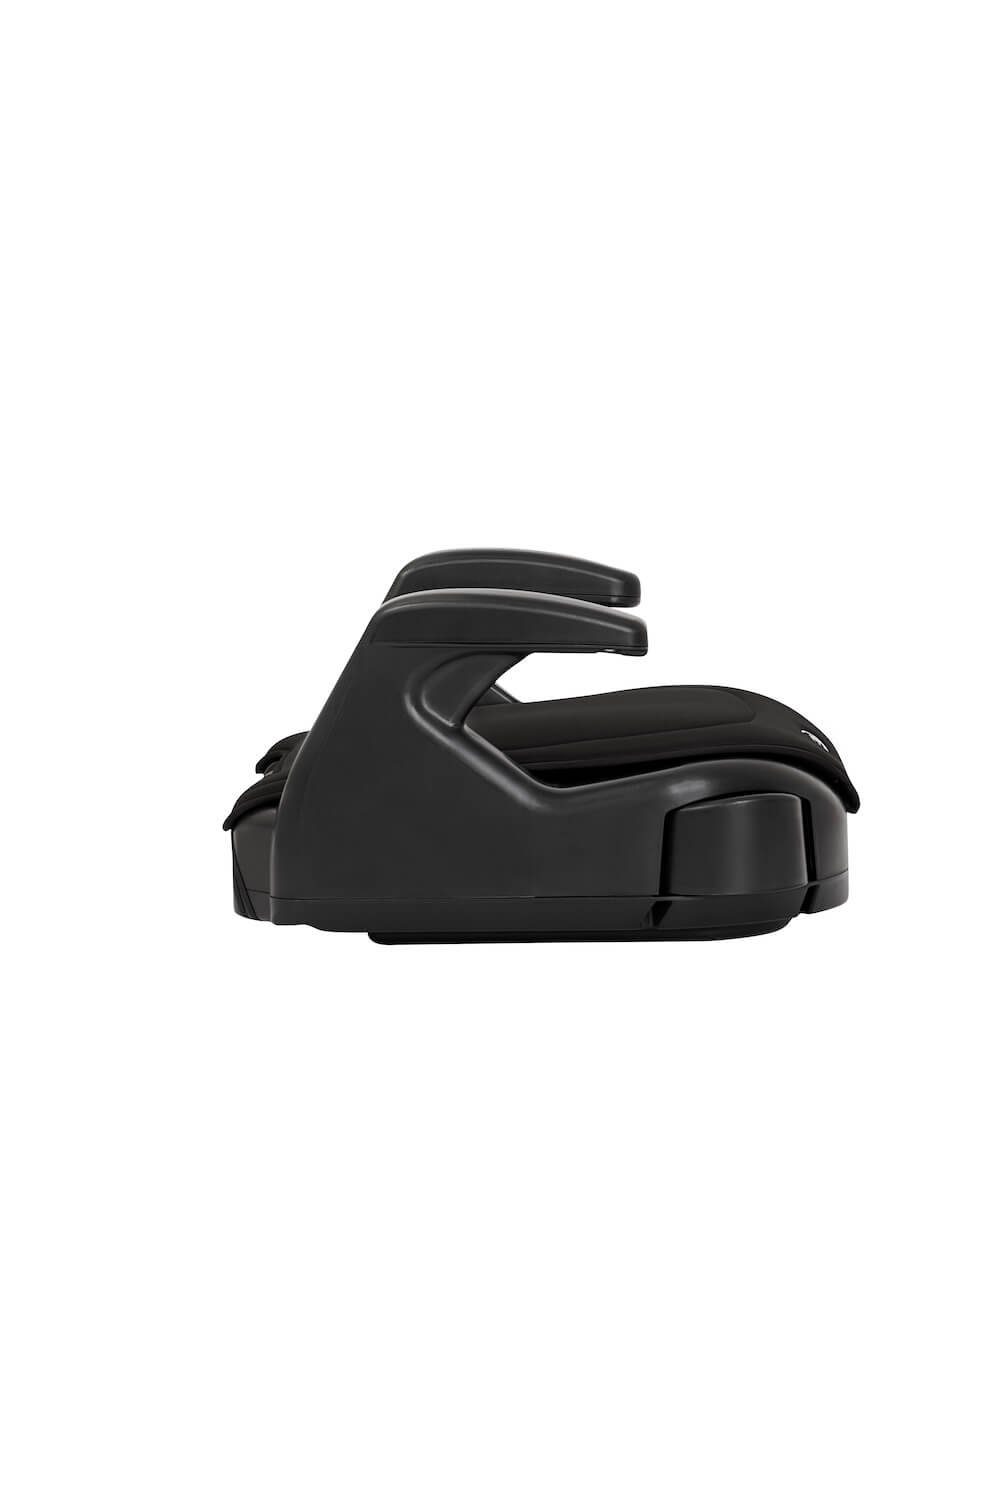 Graco Autokindersitz Graco Booster Farbe: Basic - Black R129 Kindersitzerhöhung 